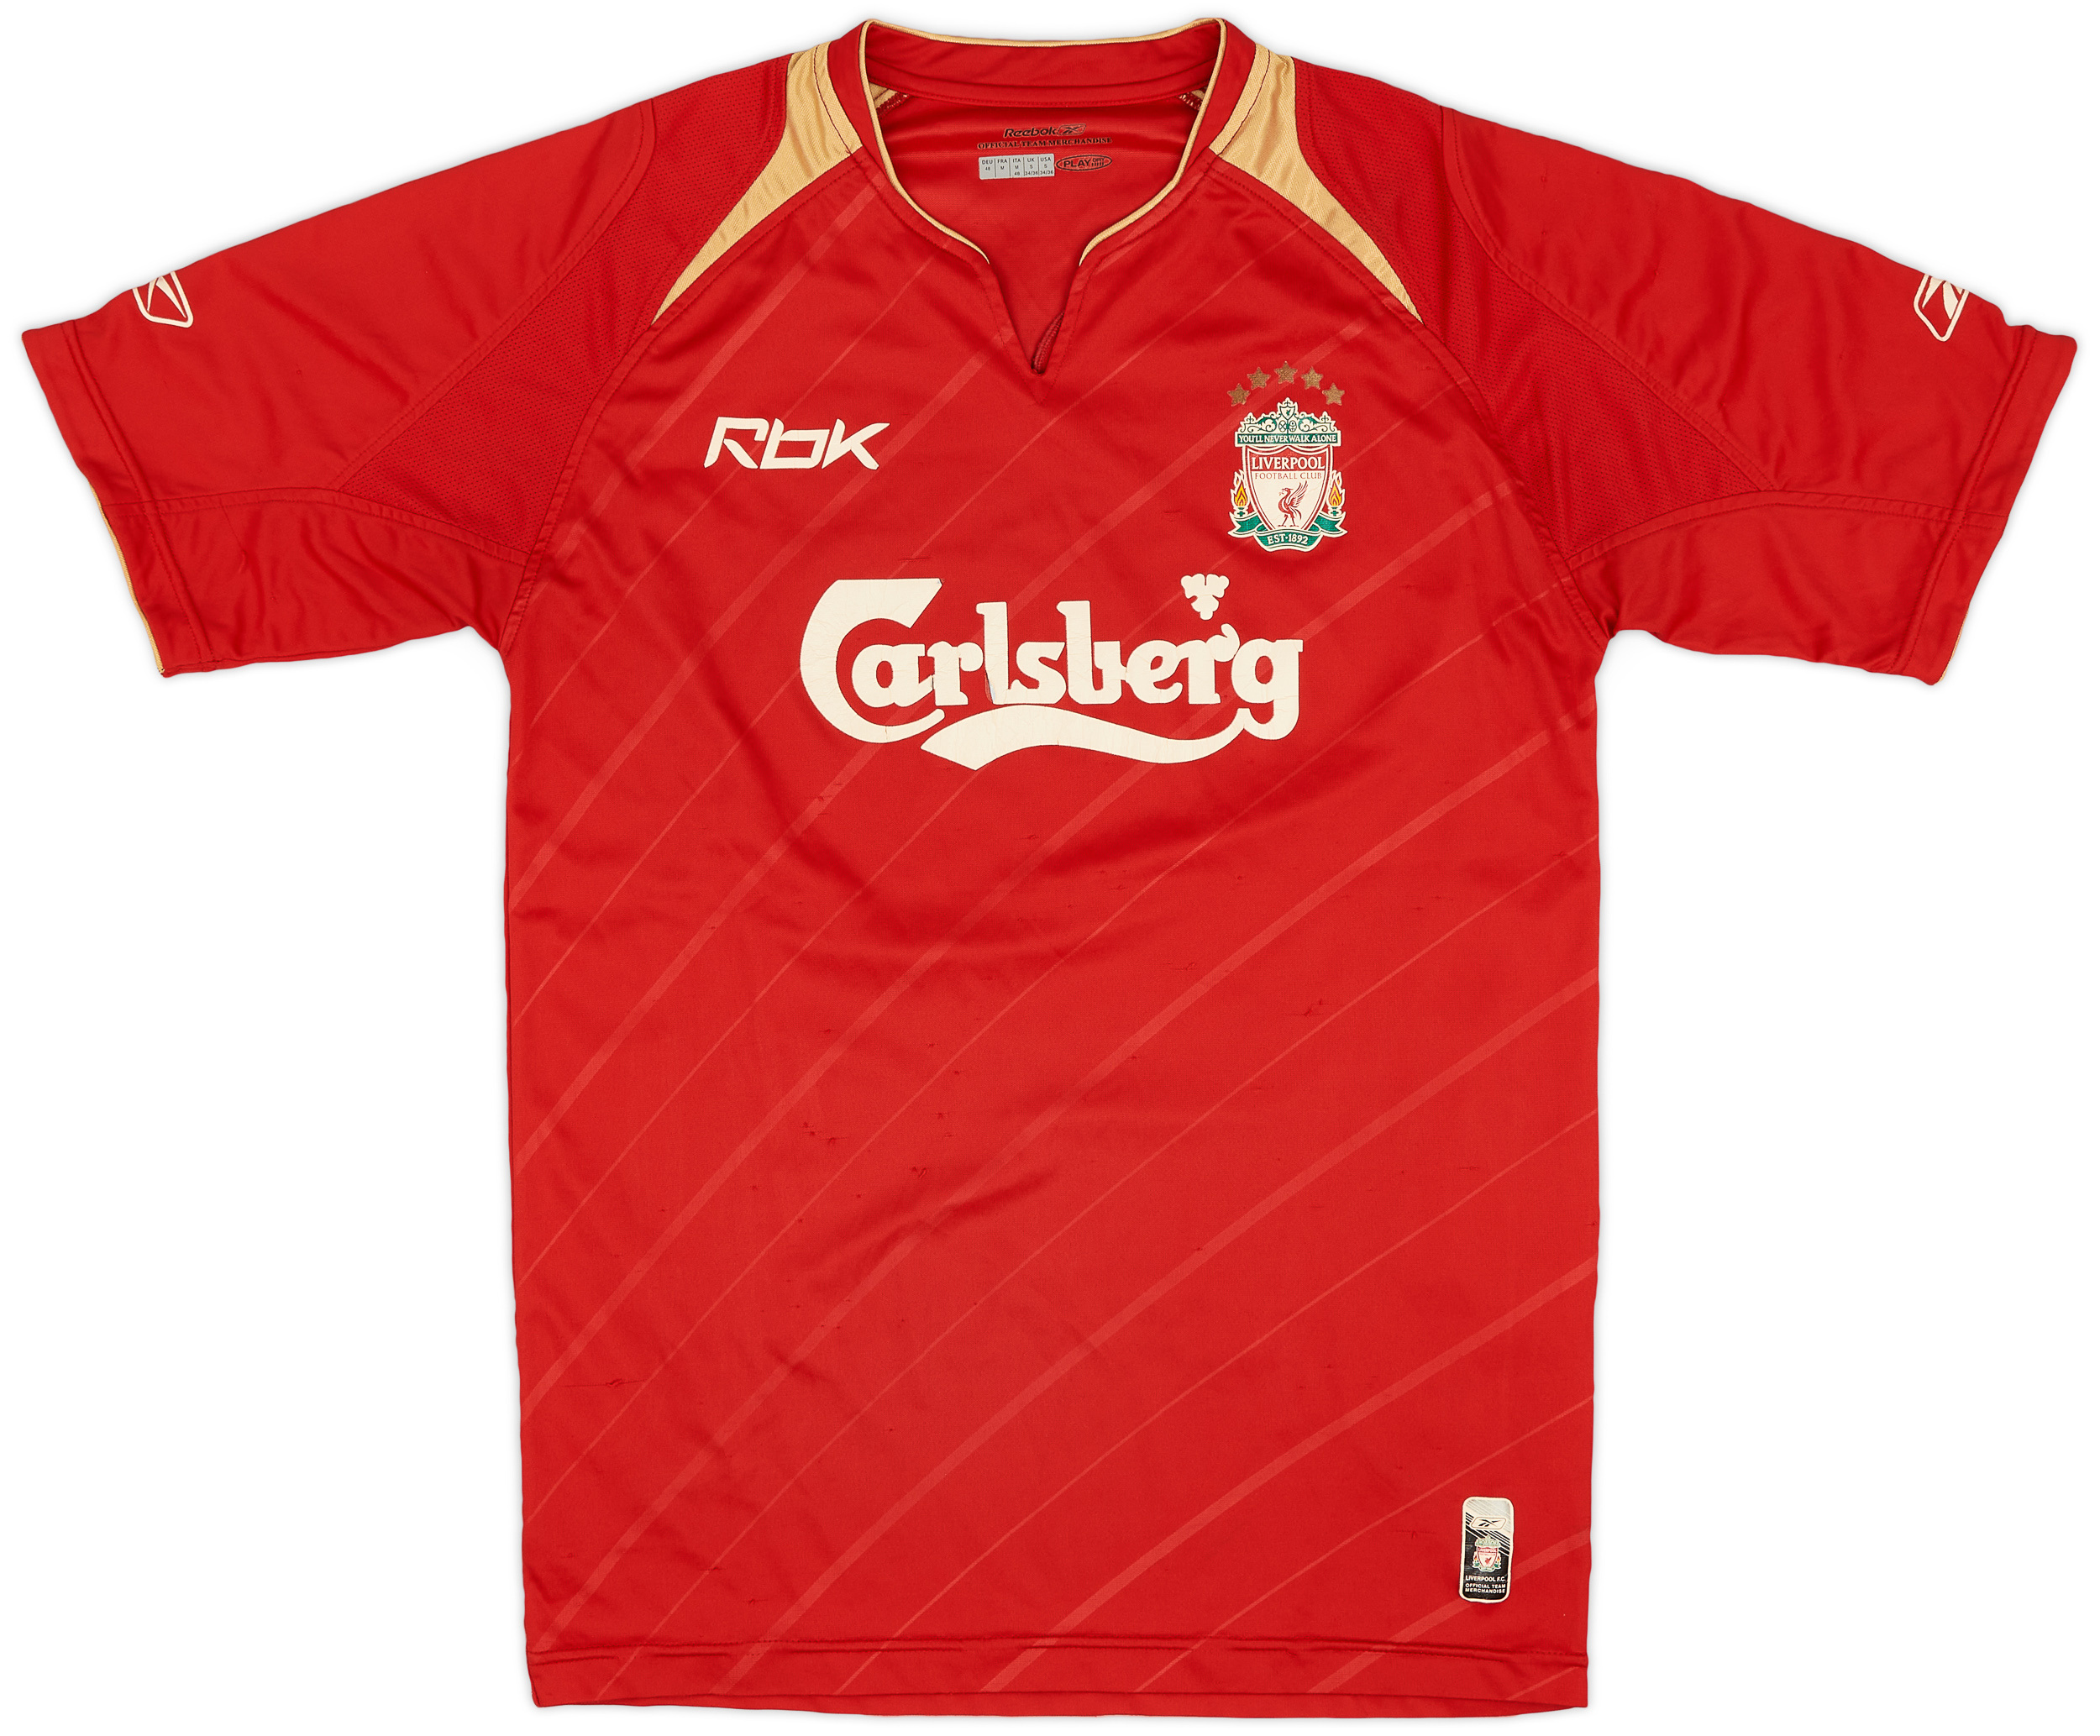 2005-06 Liverpool CL Home Shirt - 5/10 - ()